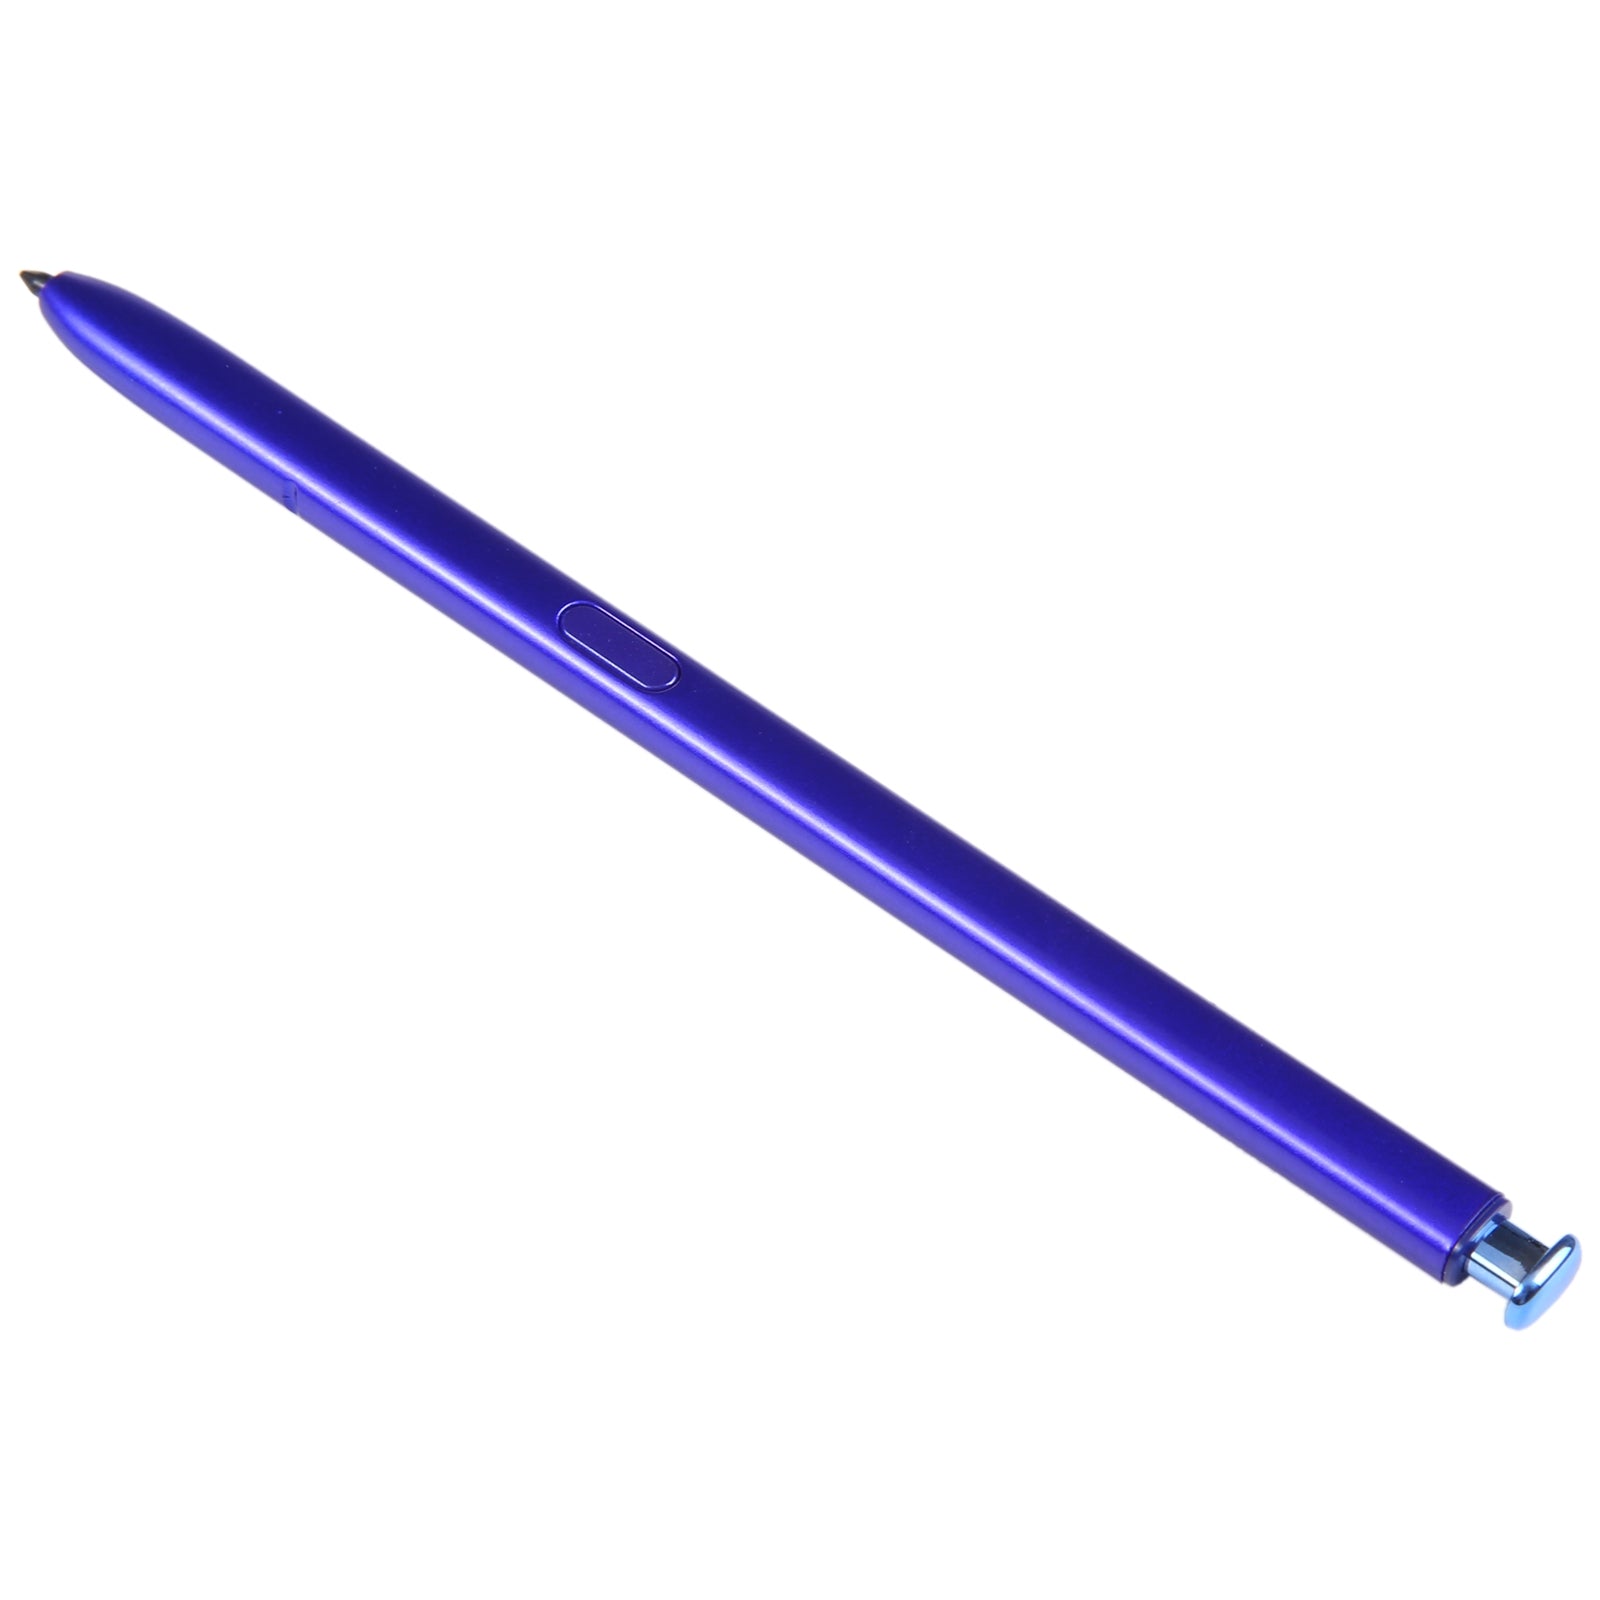 Lapiz Puntero Stylus Pen Samsung Galaxy Note 10 970F Azul